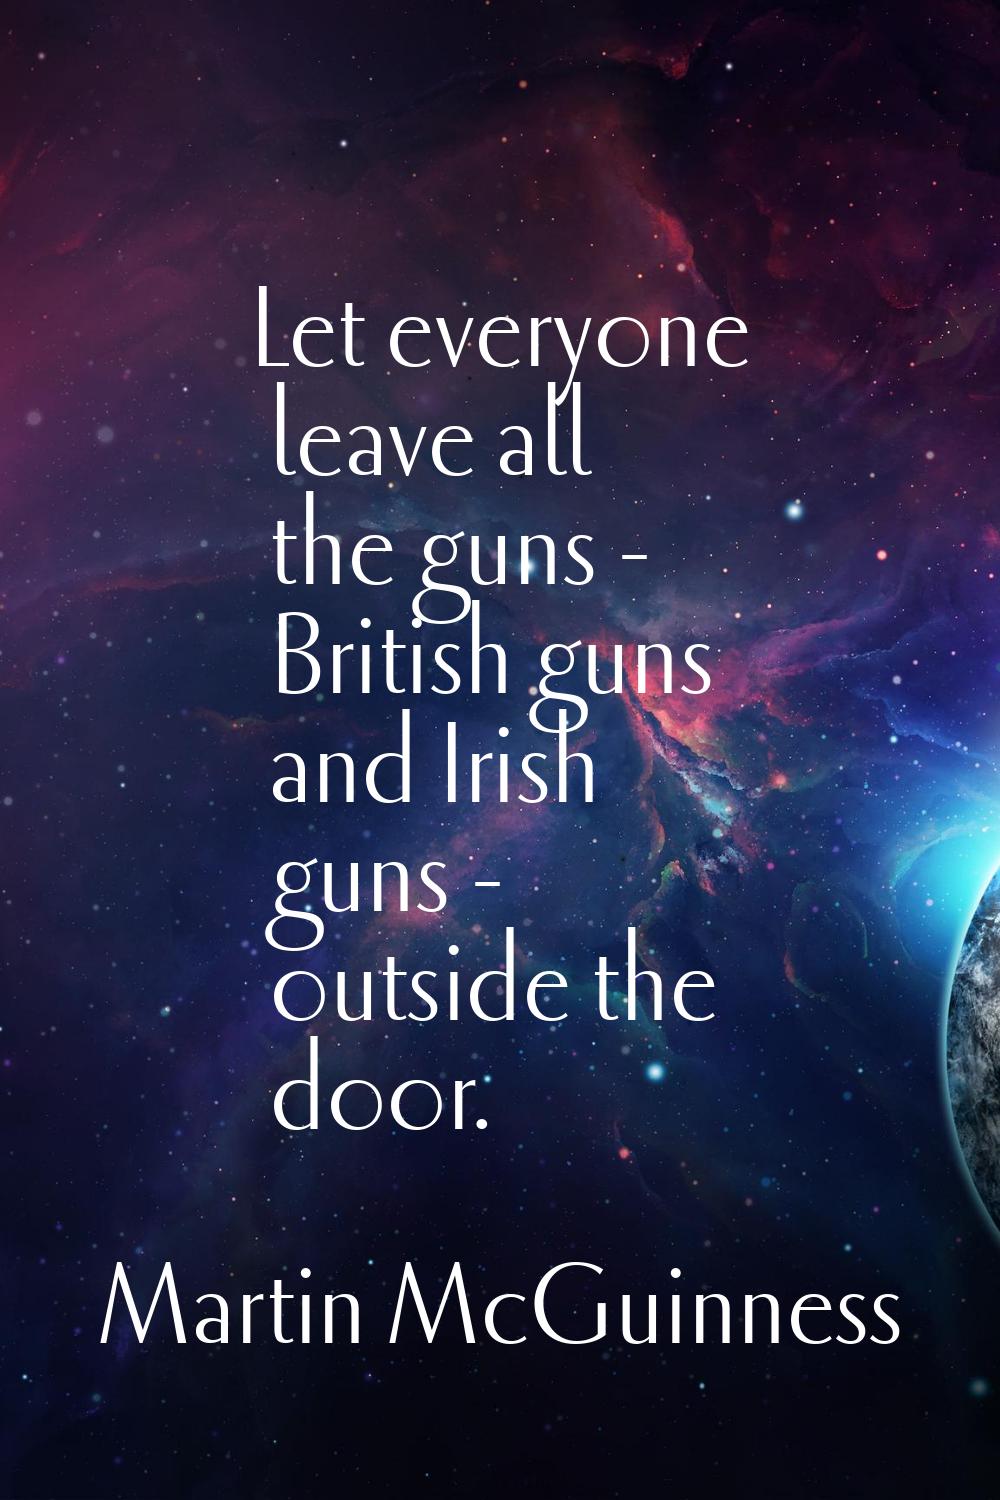 Let everyone leave all the guns - British guns and Irish guns - outside the door.